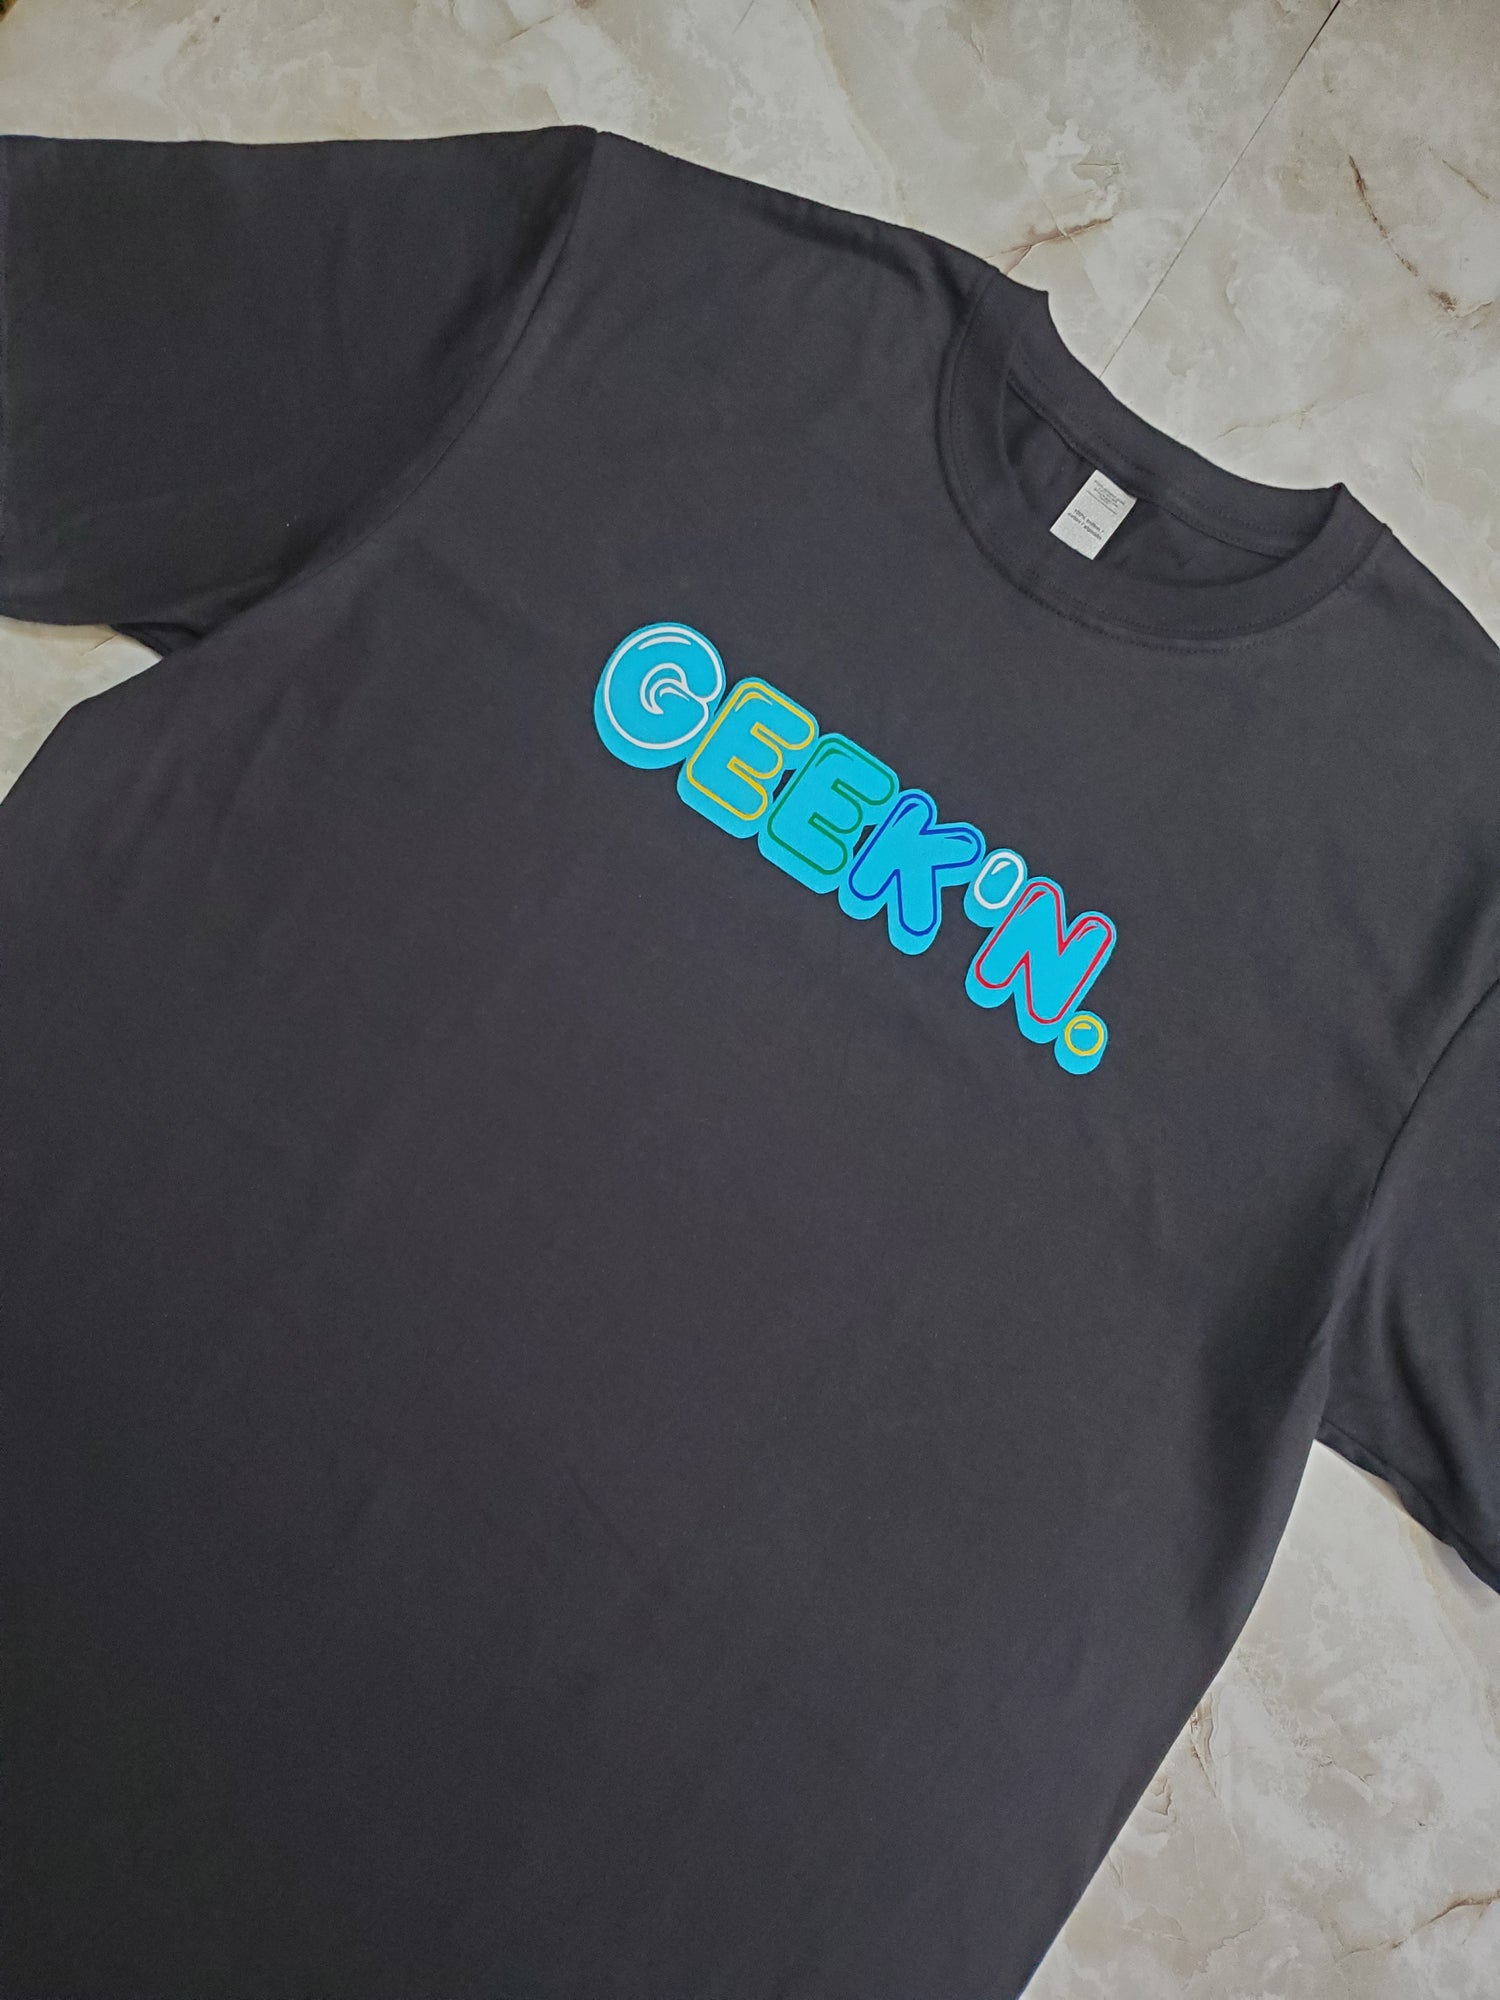 GEEK'N. T-Shirt (Black) - Centre Ave Clothing Co.